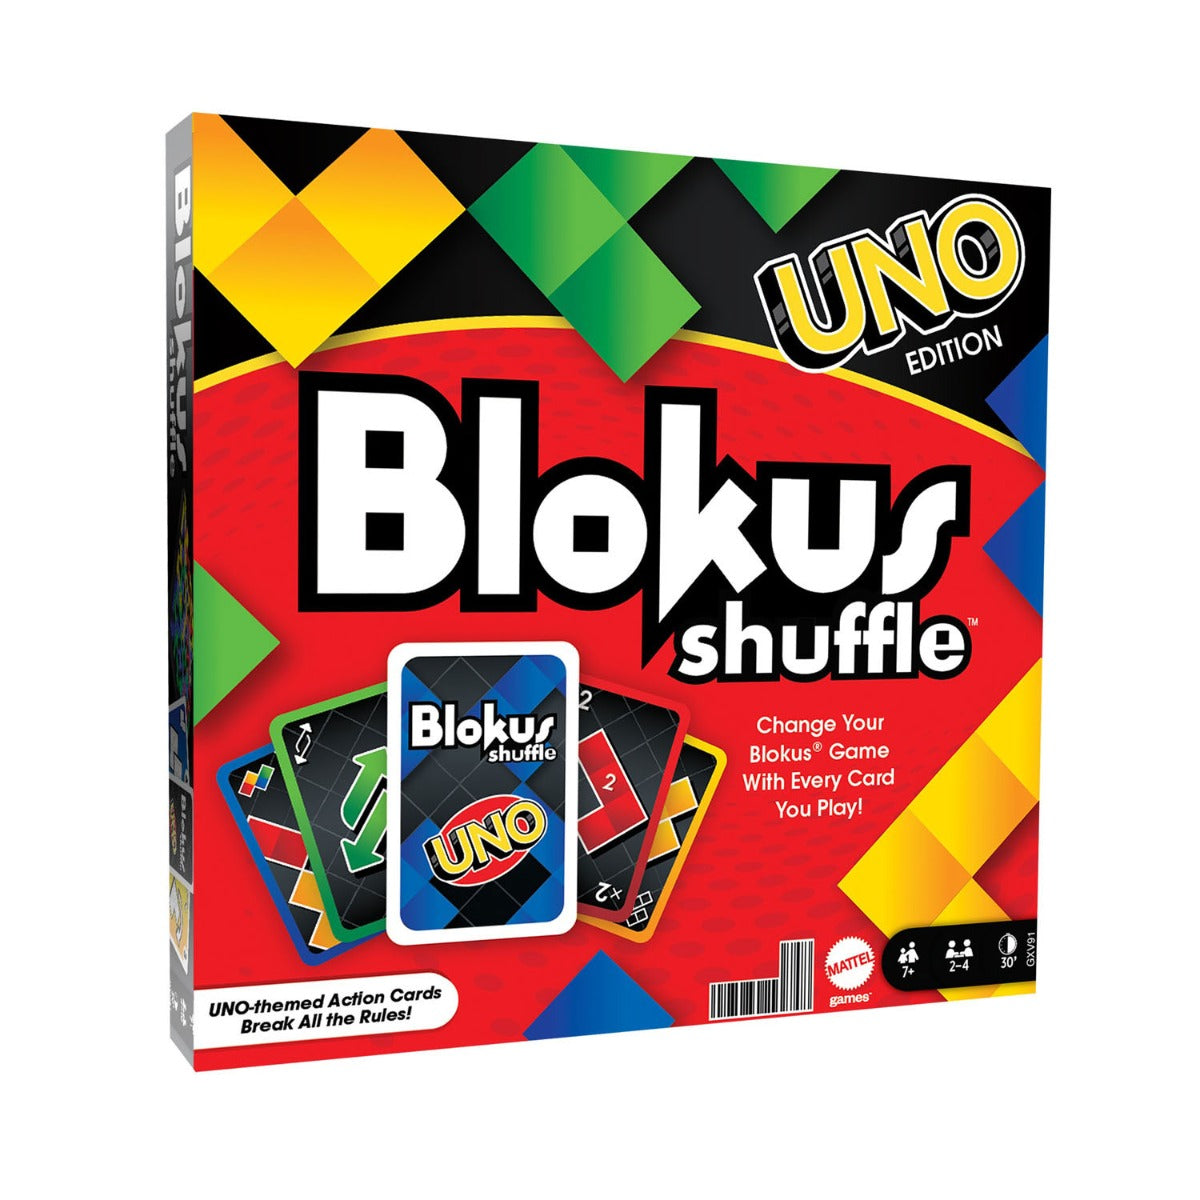 Blokus Shuffle - Uno Edition